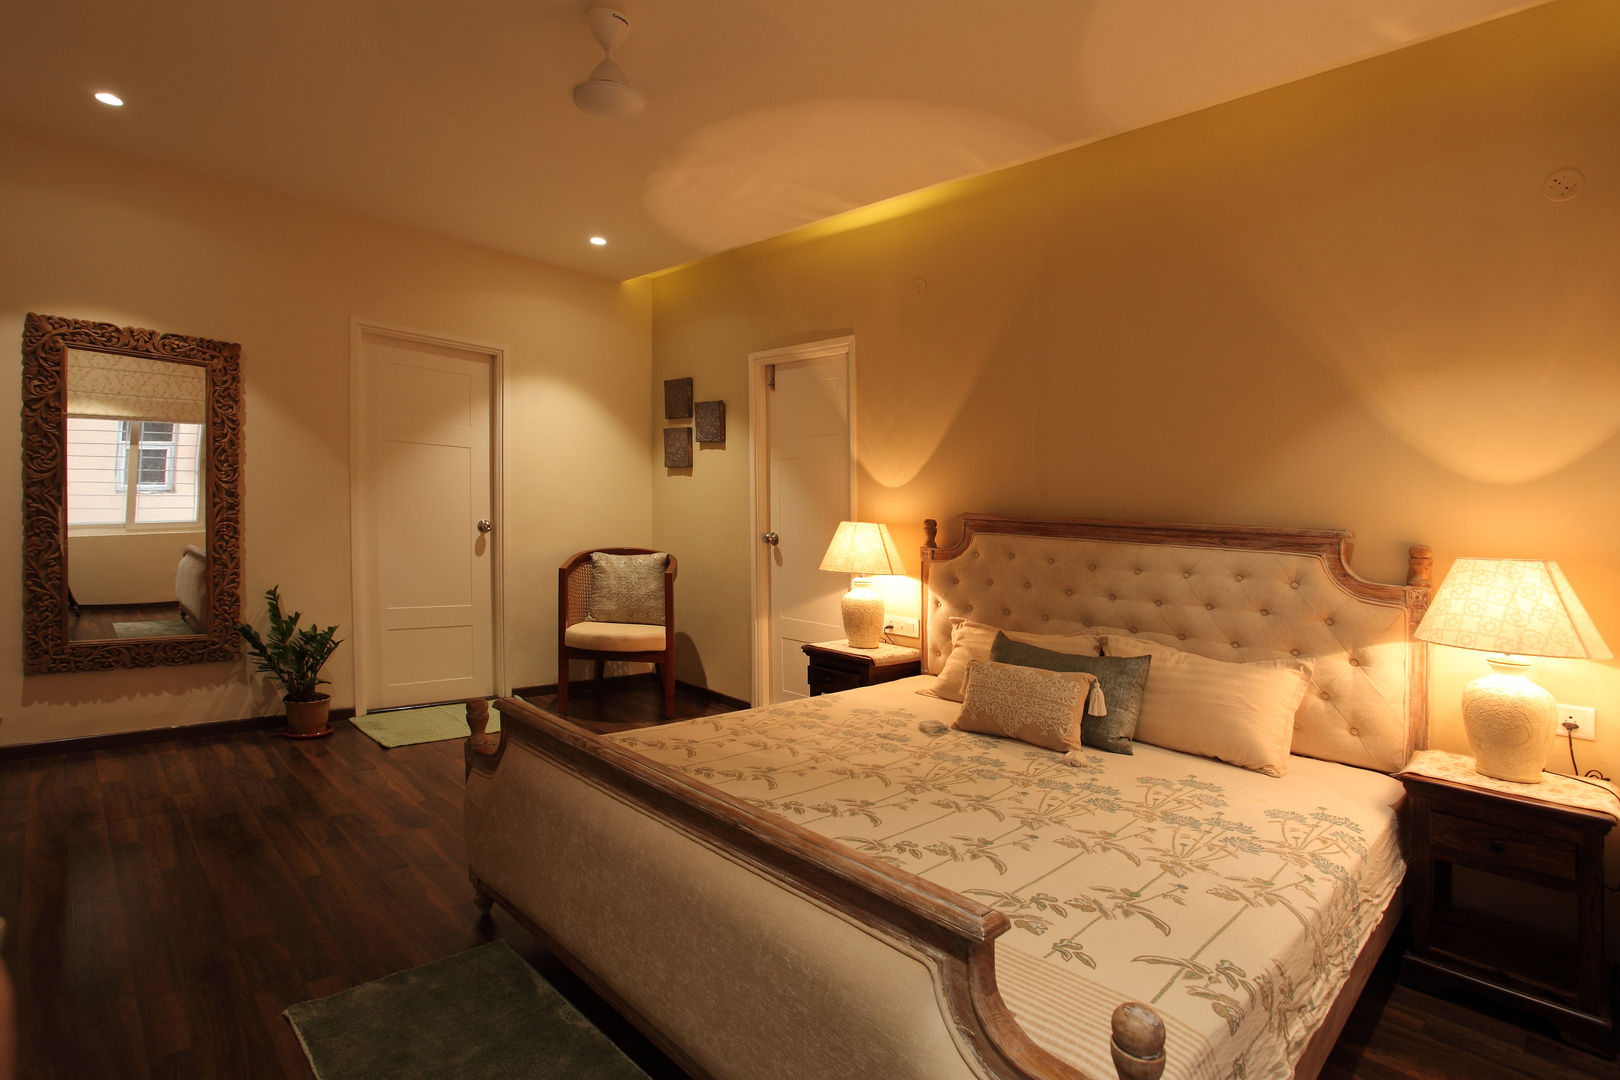 Apartment, Hyderabad, Saloni Narayankar Interiors Saloni Narayankar Interiors Спальня в рустикальном стиле Кровати и изголовья